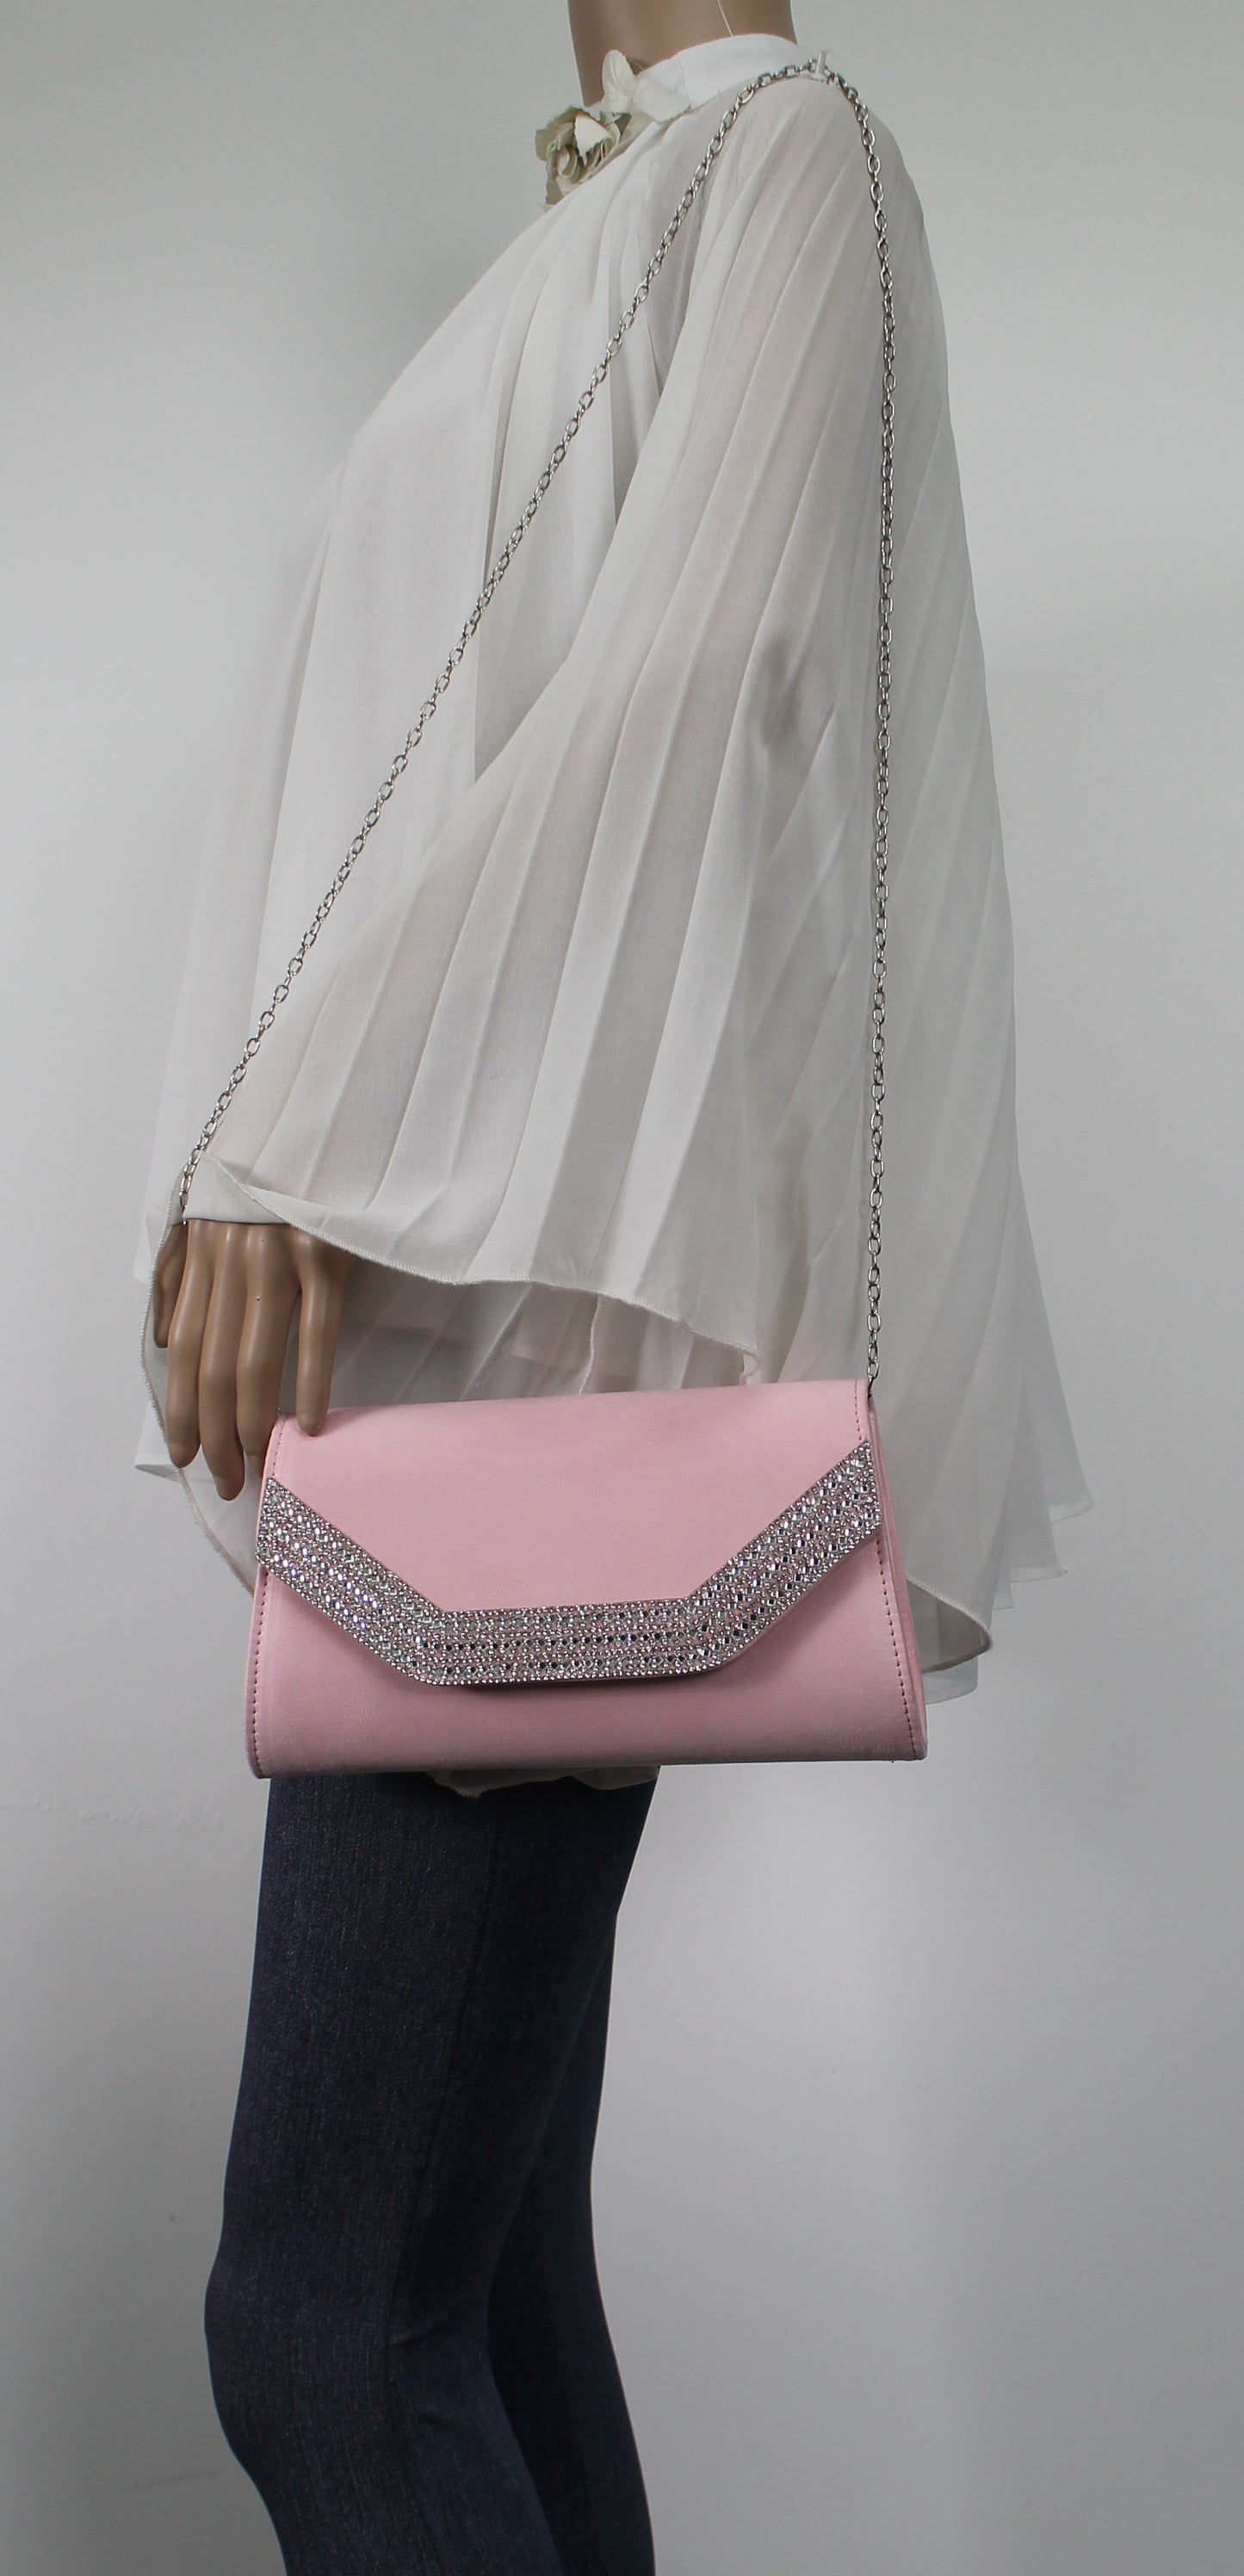 SWANKYSWANS Harper Clutch Bag Pink Cute Cheap Clutch Bag For Weddings School and Work